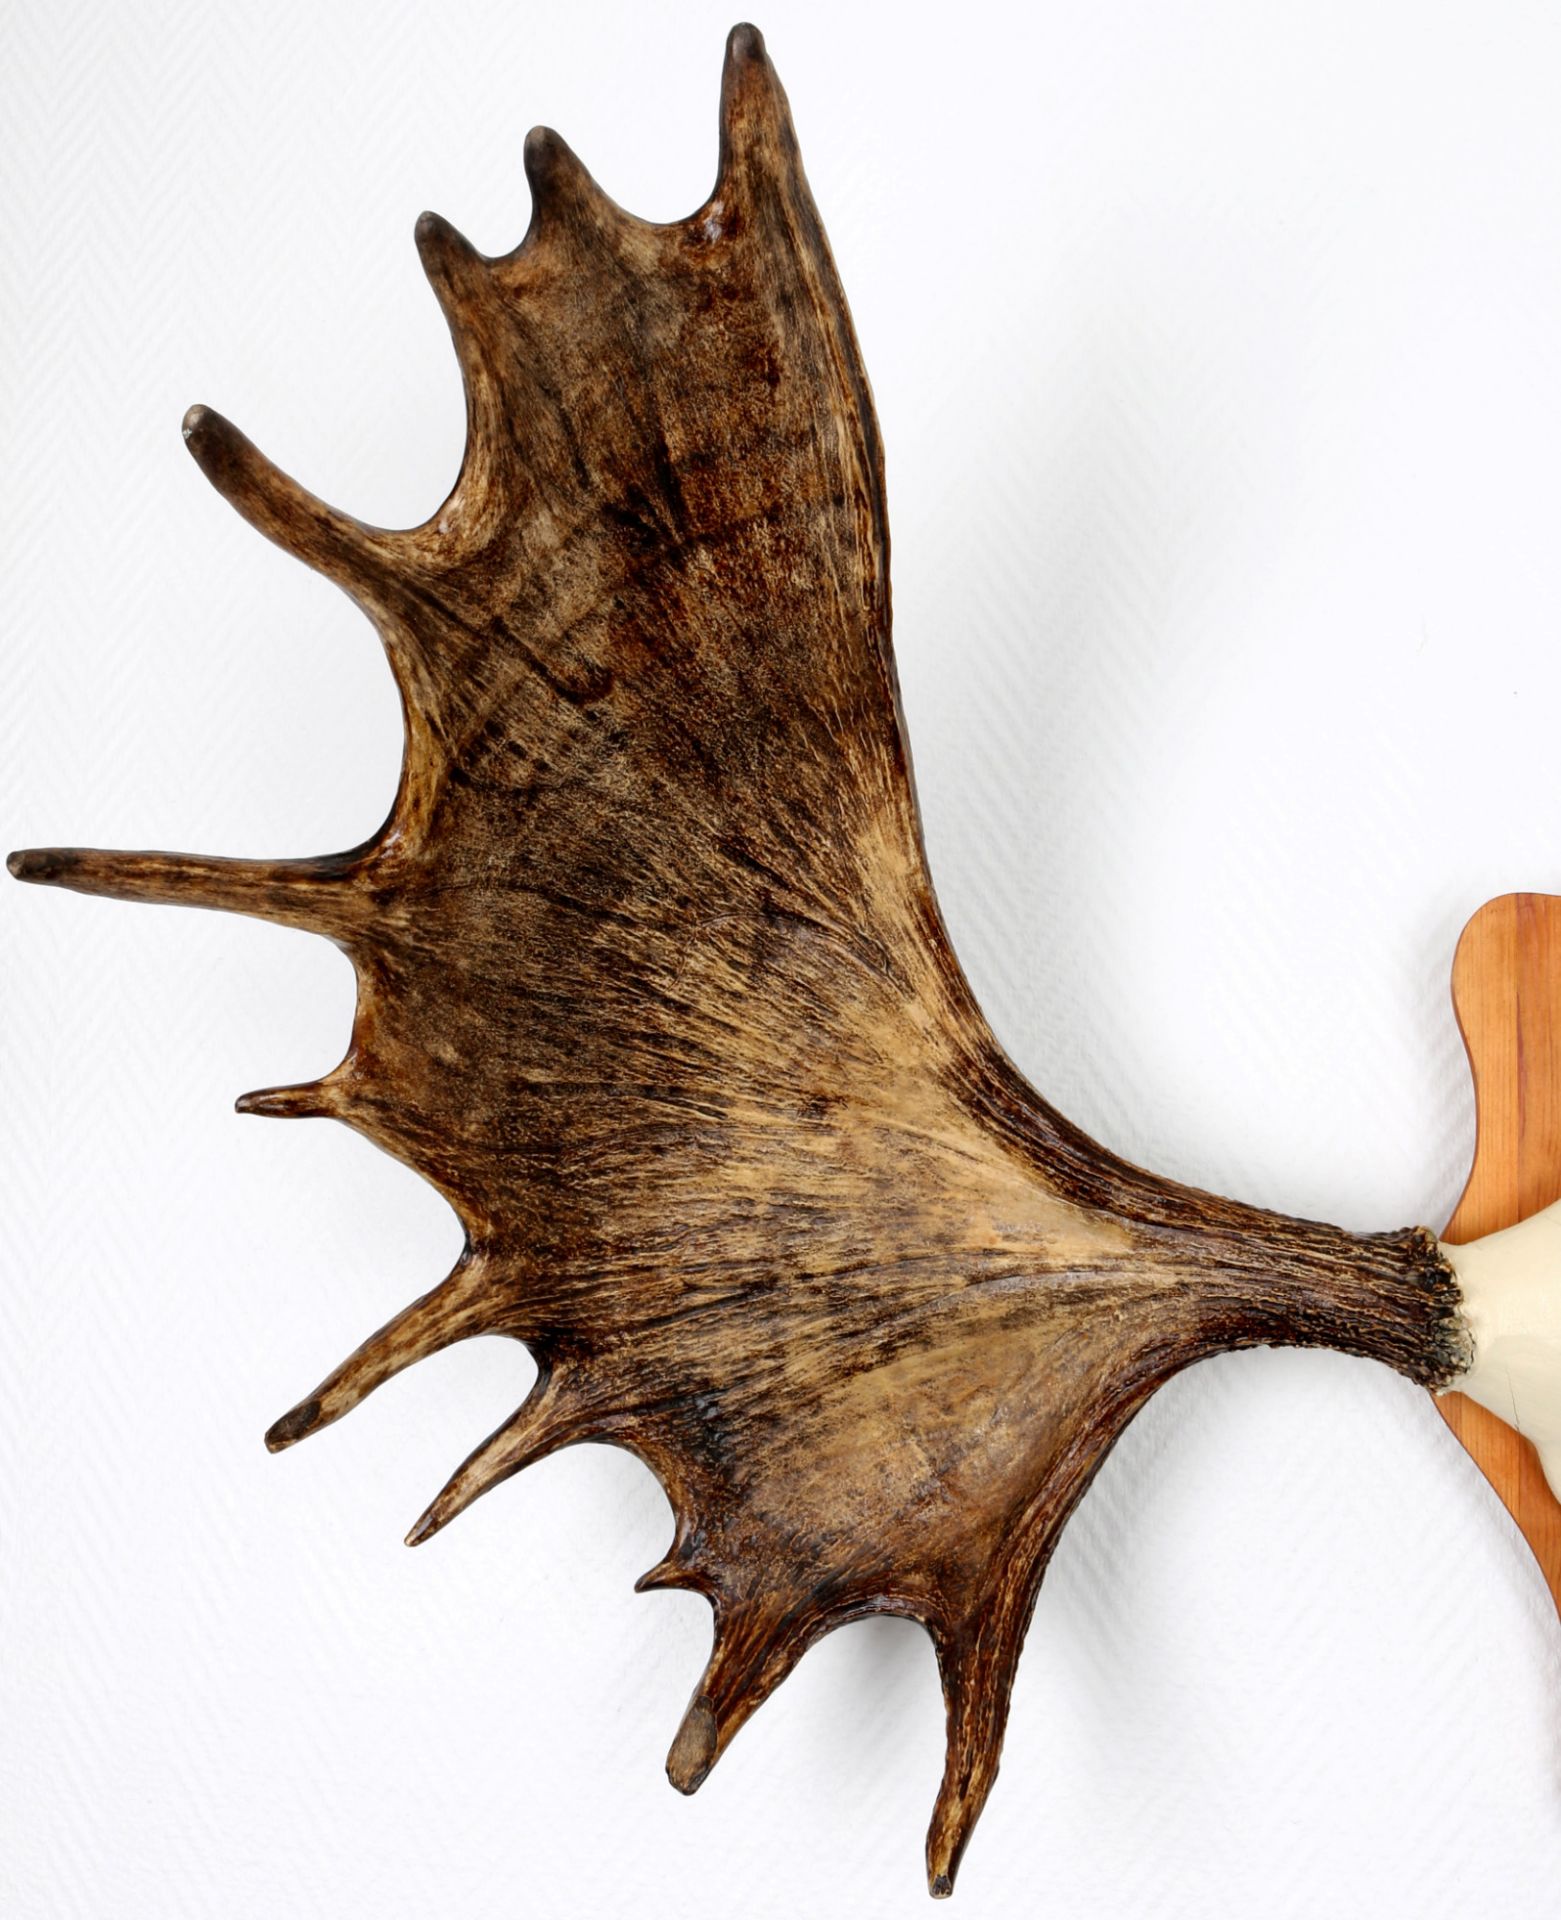 Großes Elchgeweih Jagdtrophäe aus Norwegen "111cm", moose antlers hunting trophy, - Bild 3 aus 3